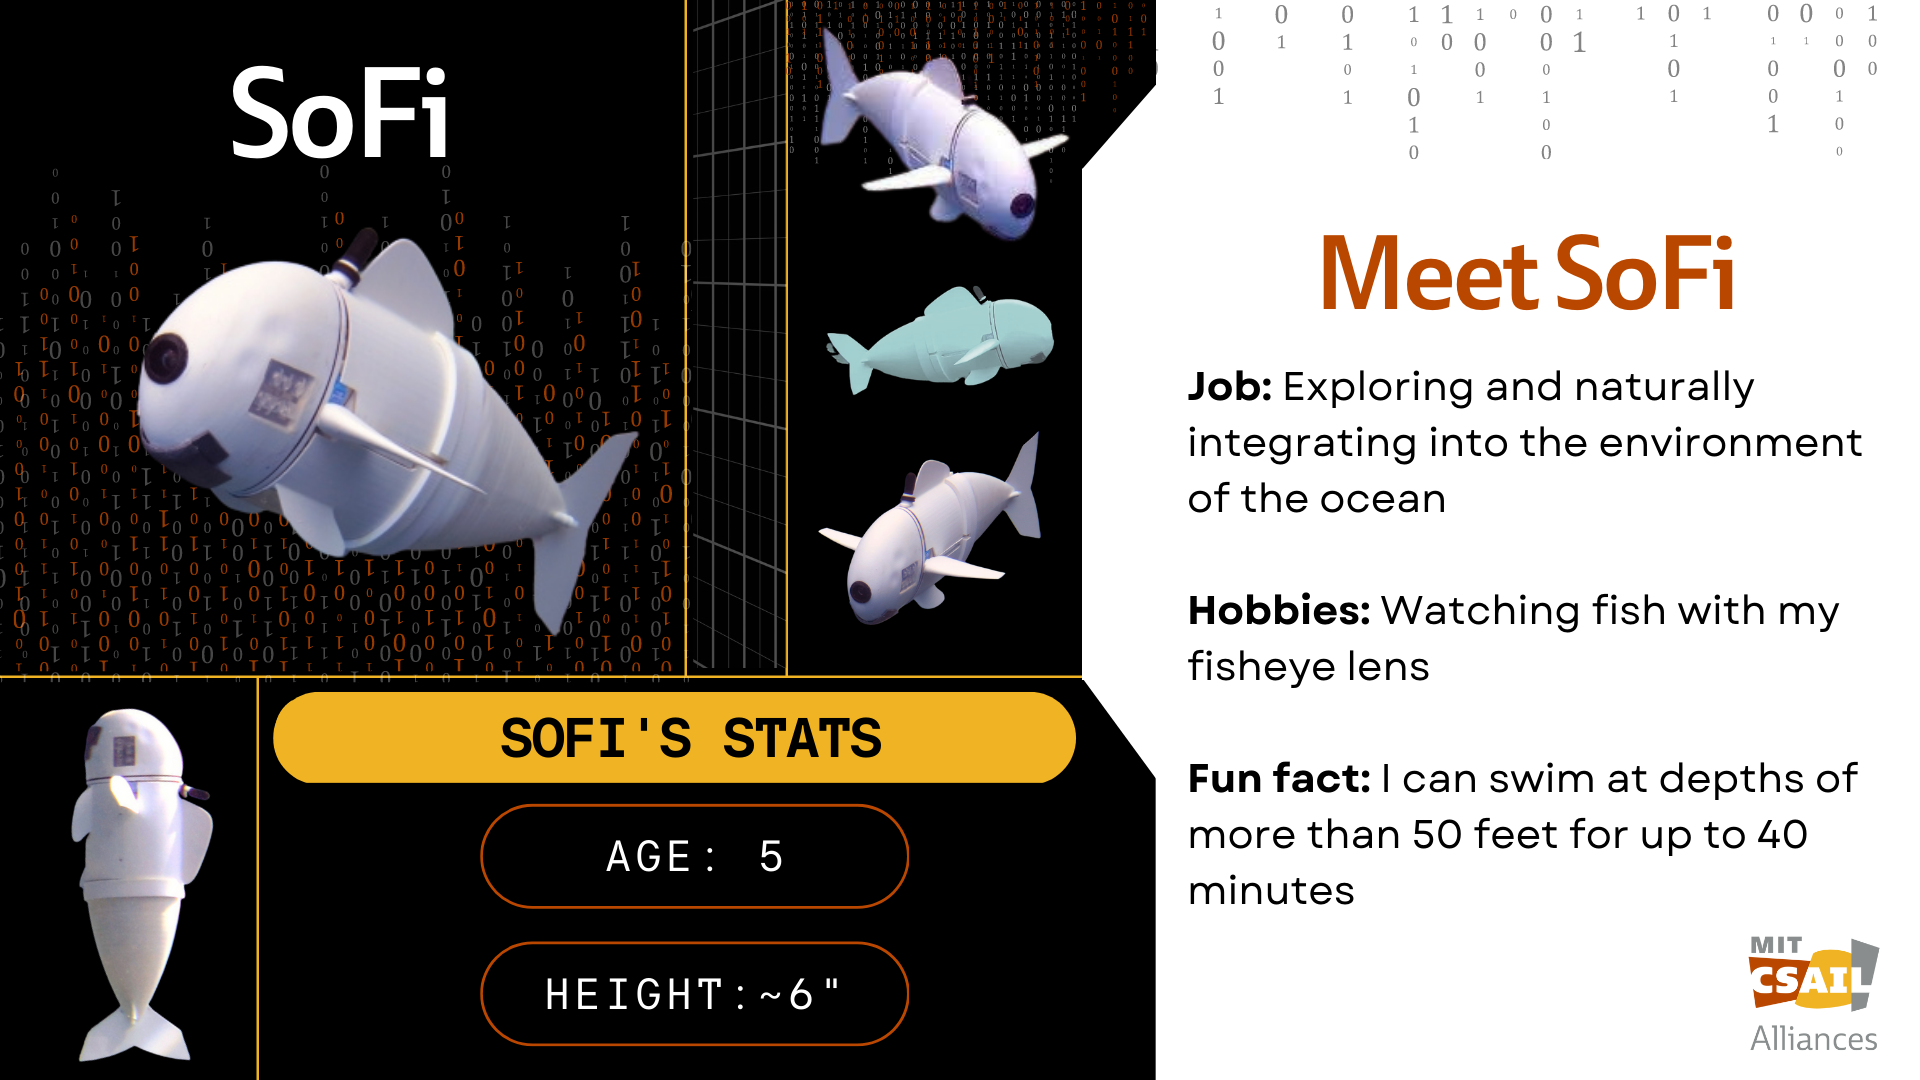 Sofi fish robot from MIT CSAIL; text that reads "Sofi" 